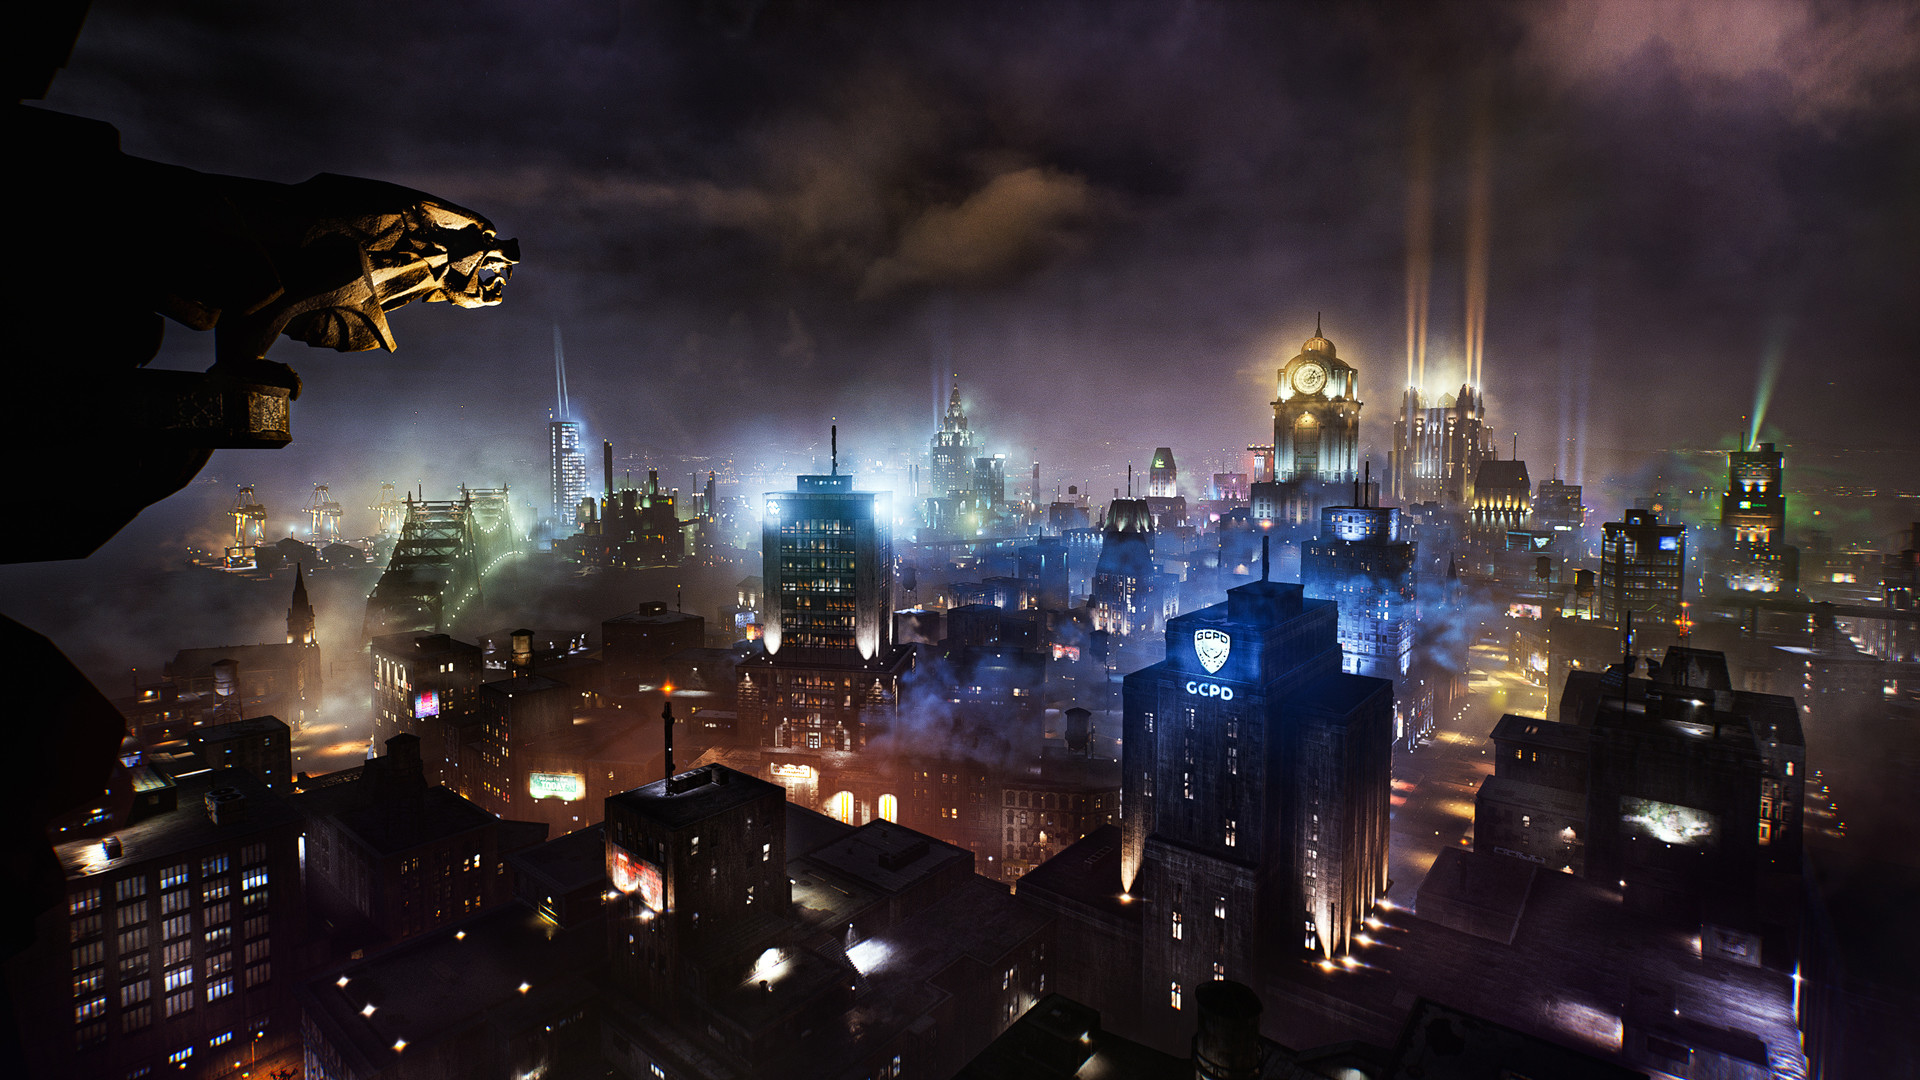 Gotham Knights. Image: WB Games